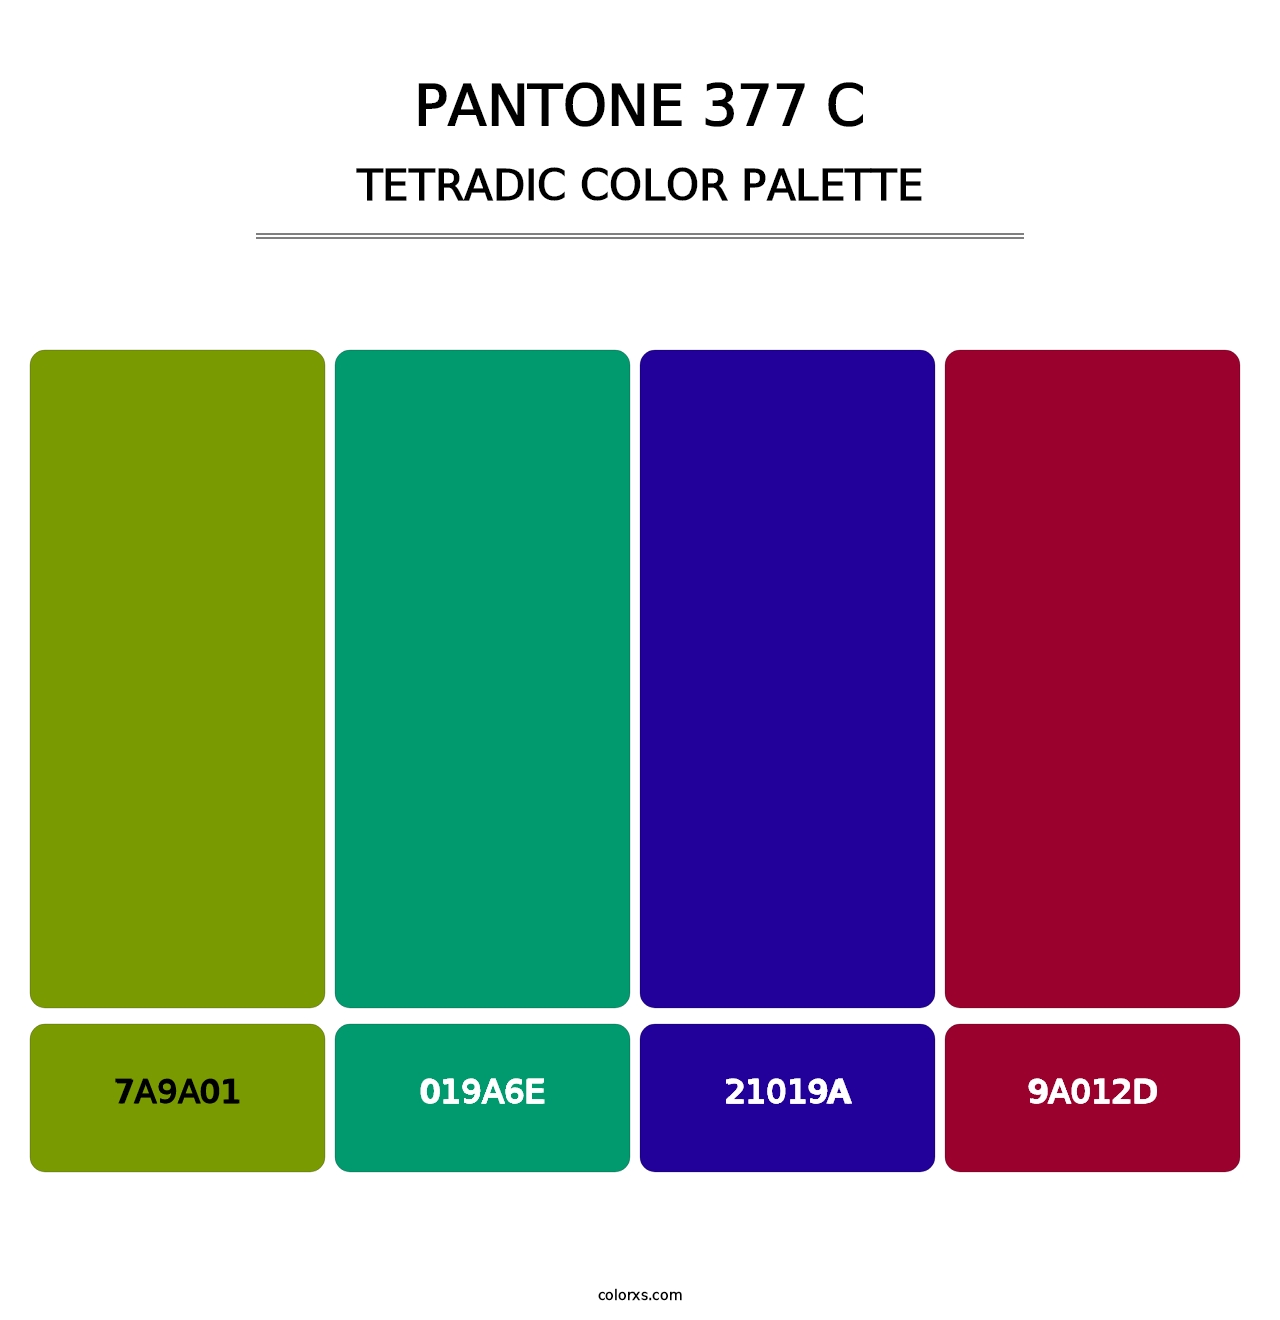 PANTONE 377 C - Tetradic Color Palette